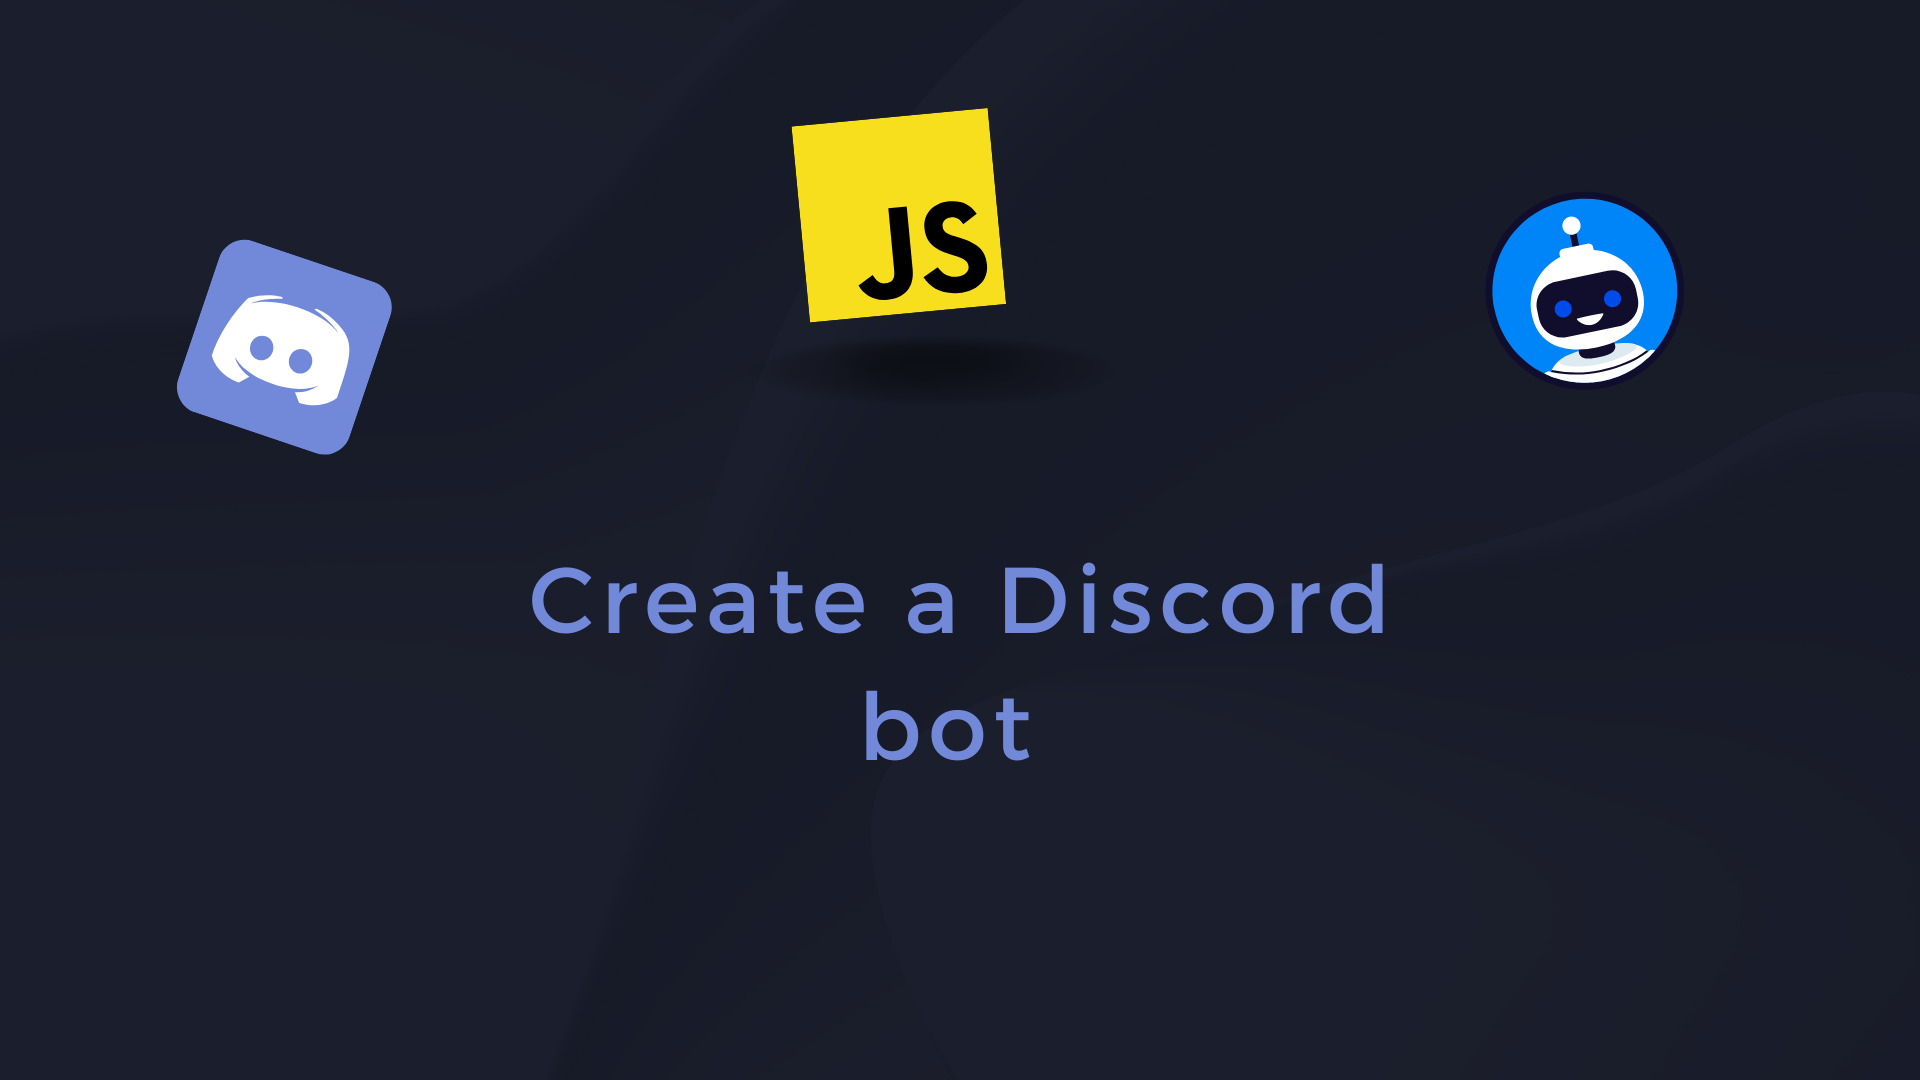 Making a Discord bot with Discord.js - Javascript - Node.js 